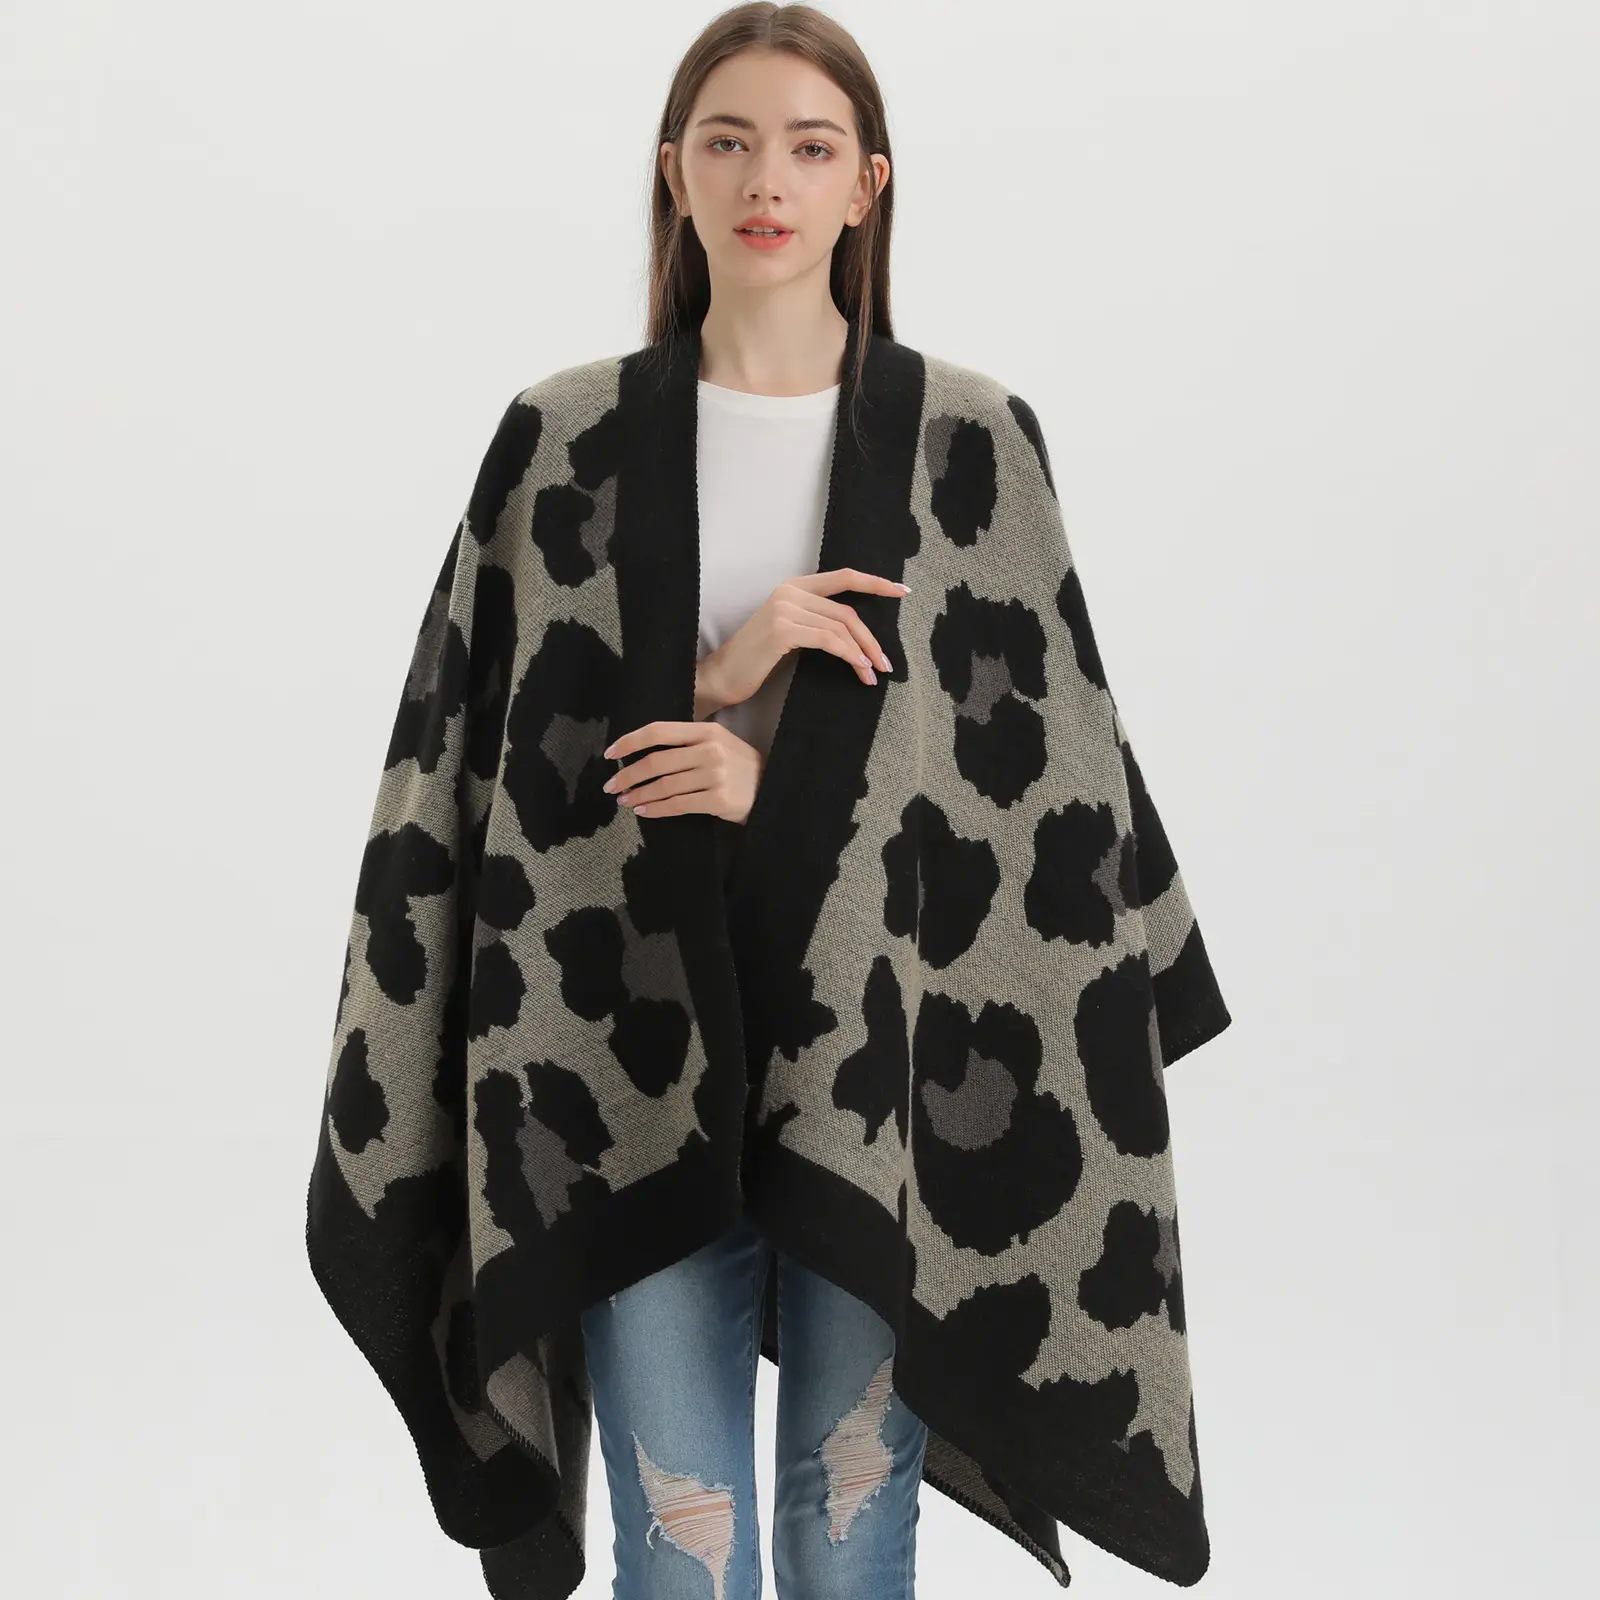 leopard jacquard Cardigan Sweater Panchos Winter Thick Blanket Scarf Women Retro Knit Scarf cape shawl